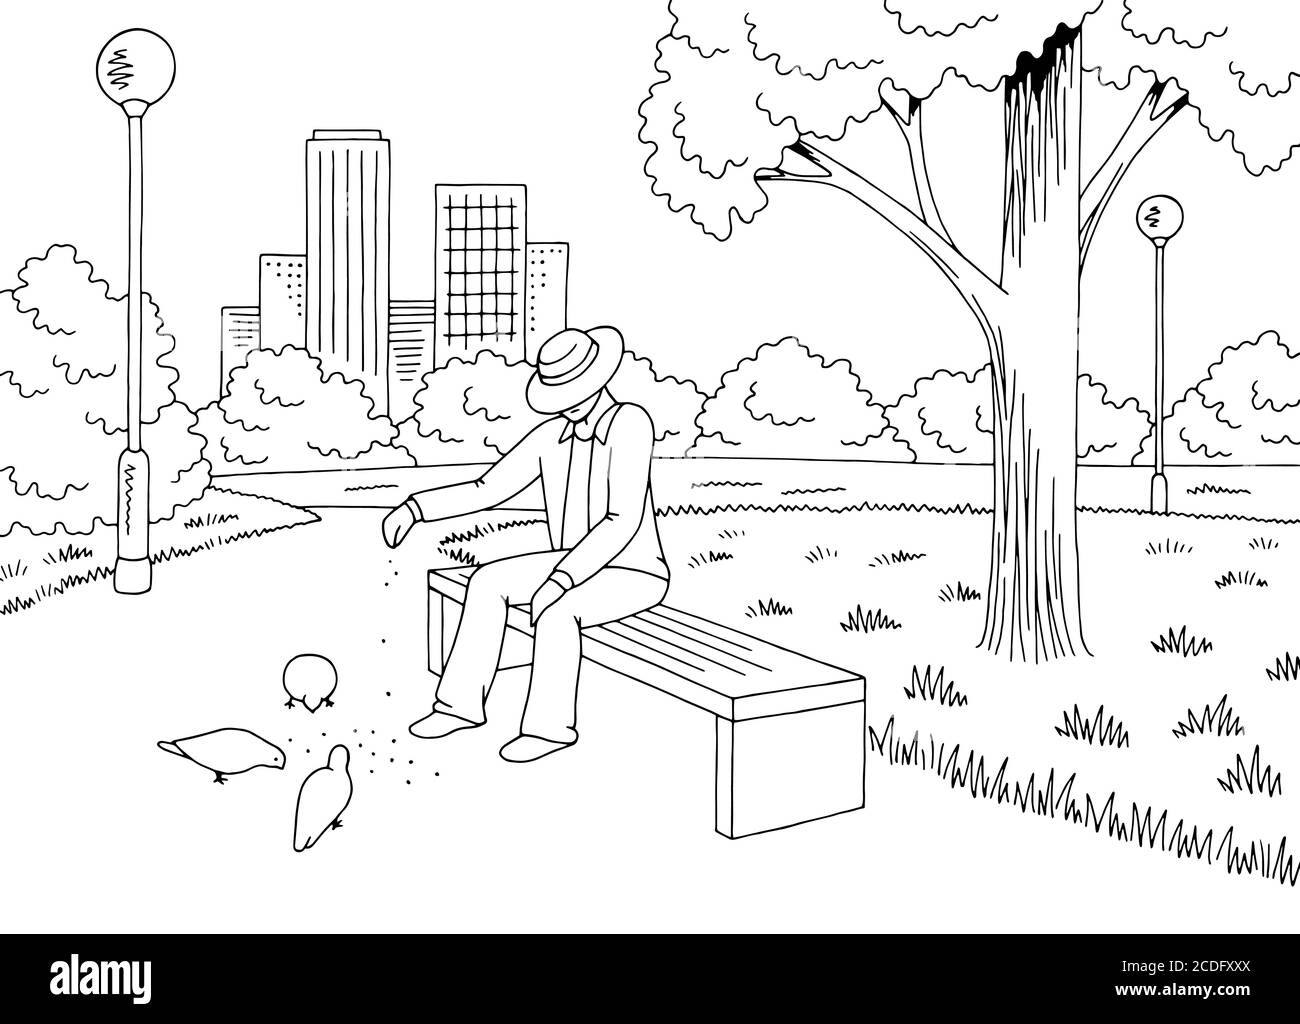 Park Grafik schwarz weiß Bank Lampe Landschaft Skizze Illustration Vektor. Alter Mann, der Vögel füttert Stock Vektor